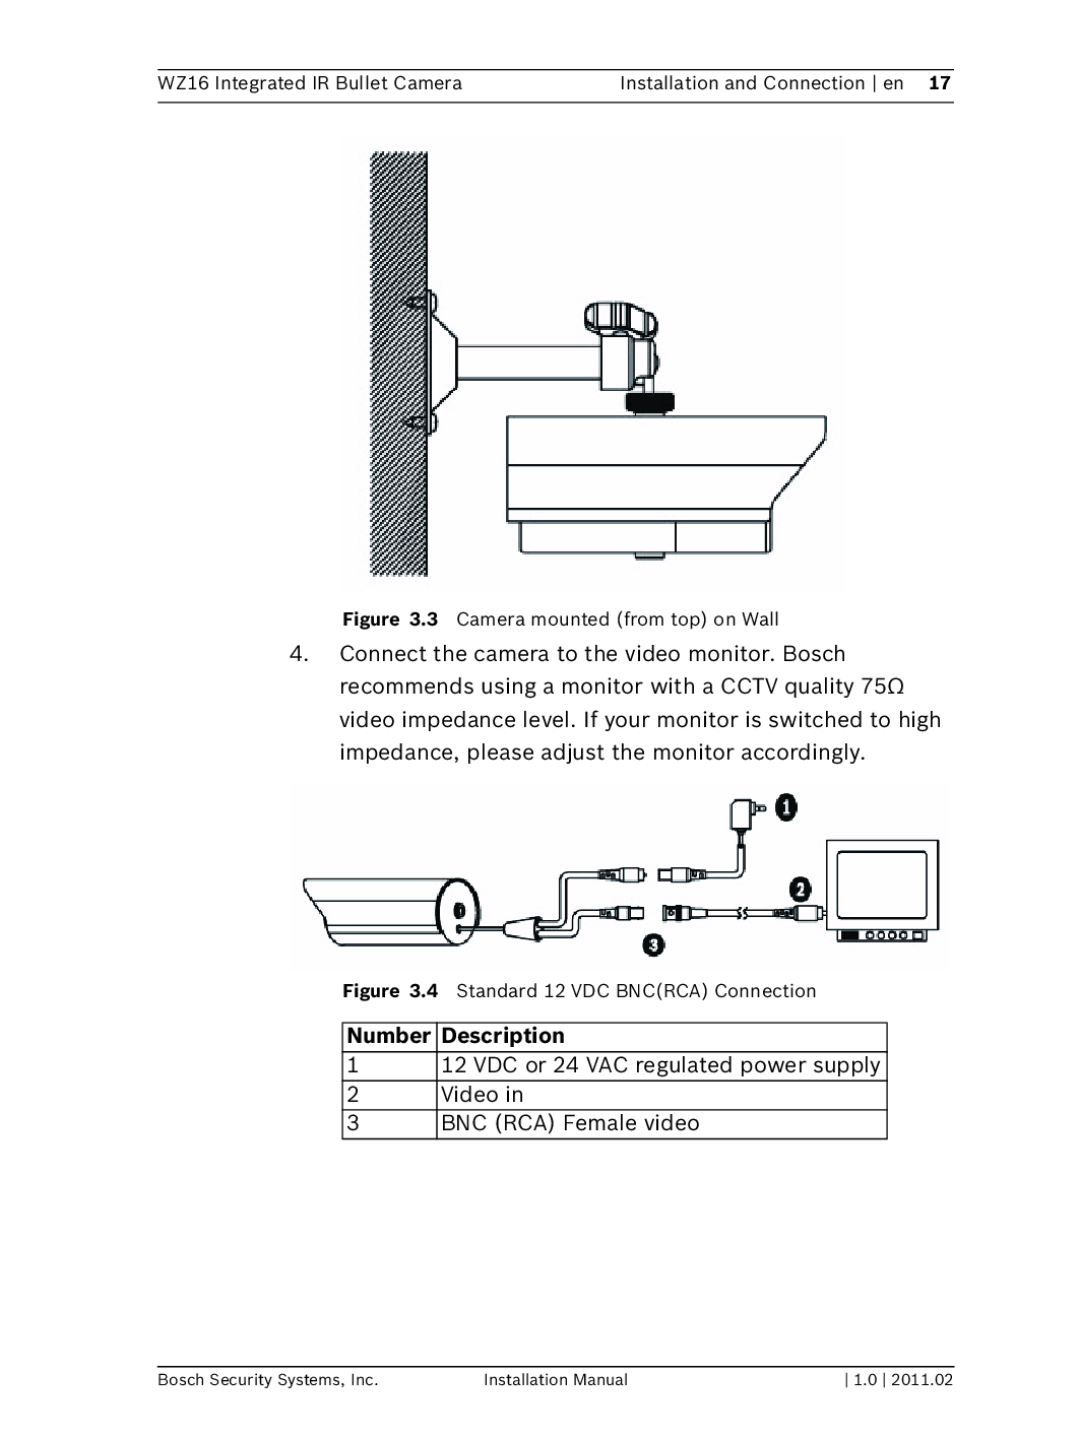 Bosch Appliances WZ16 installation manual Number Description 